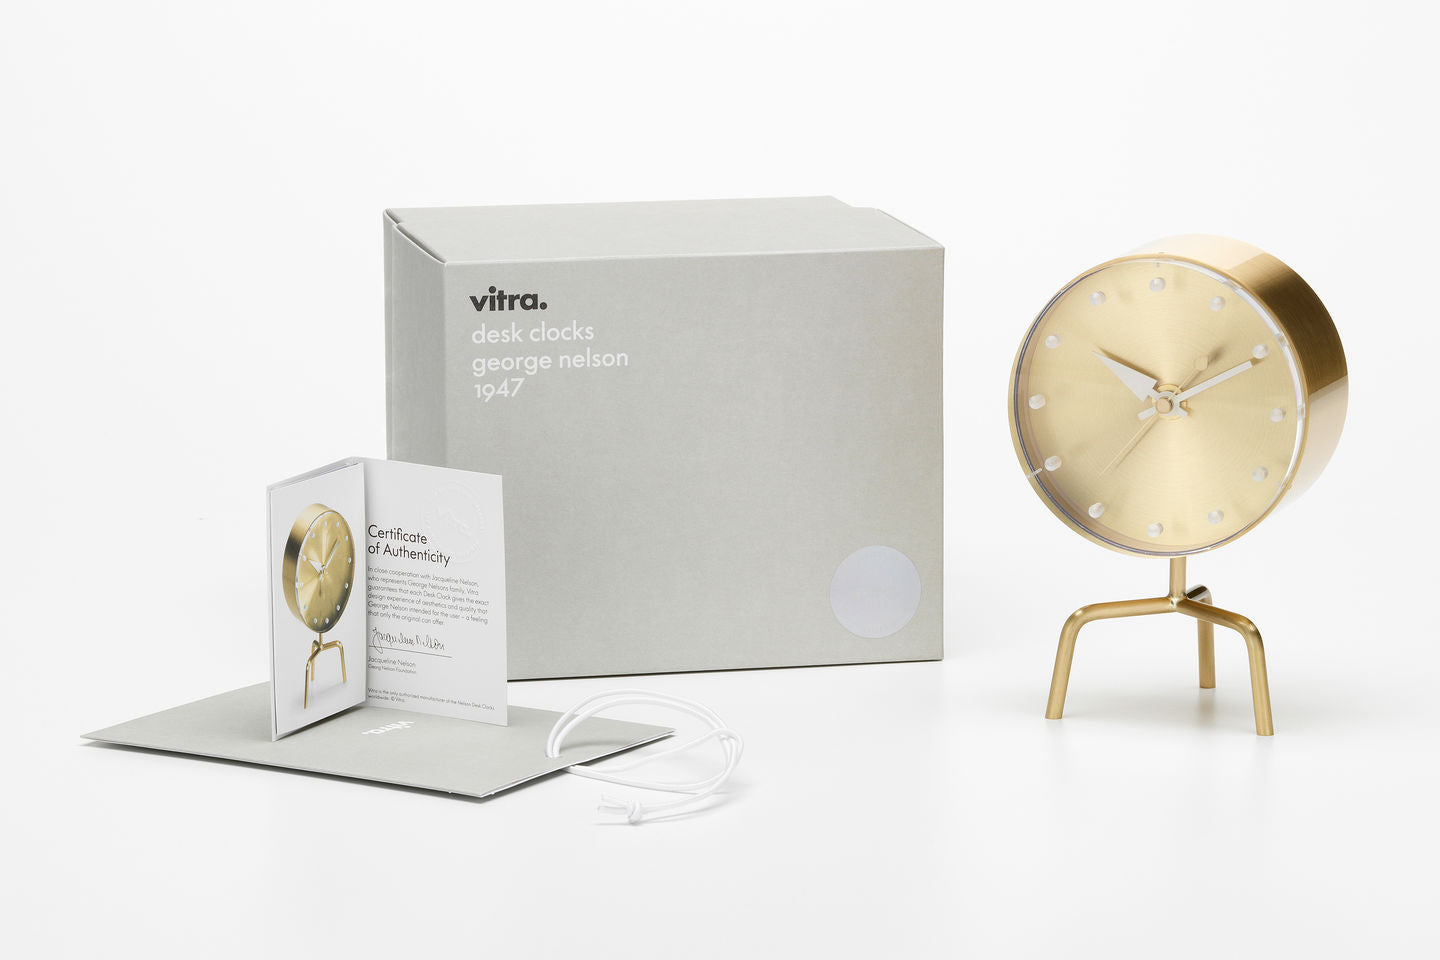 Vitra desk tripod clock